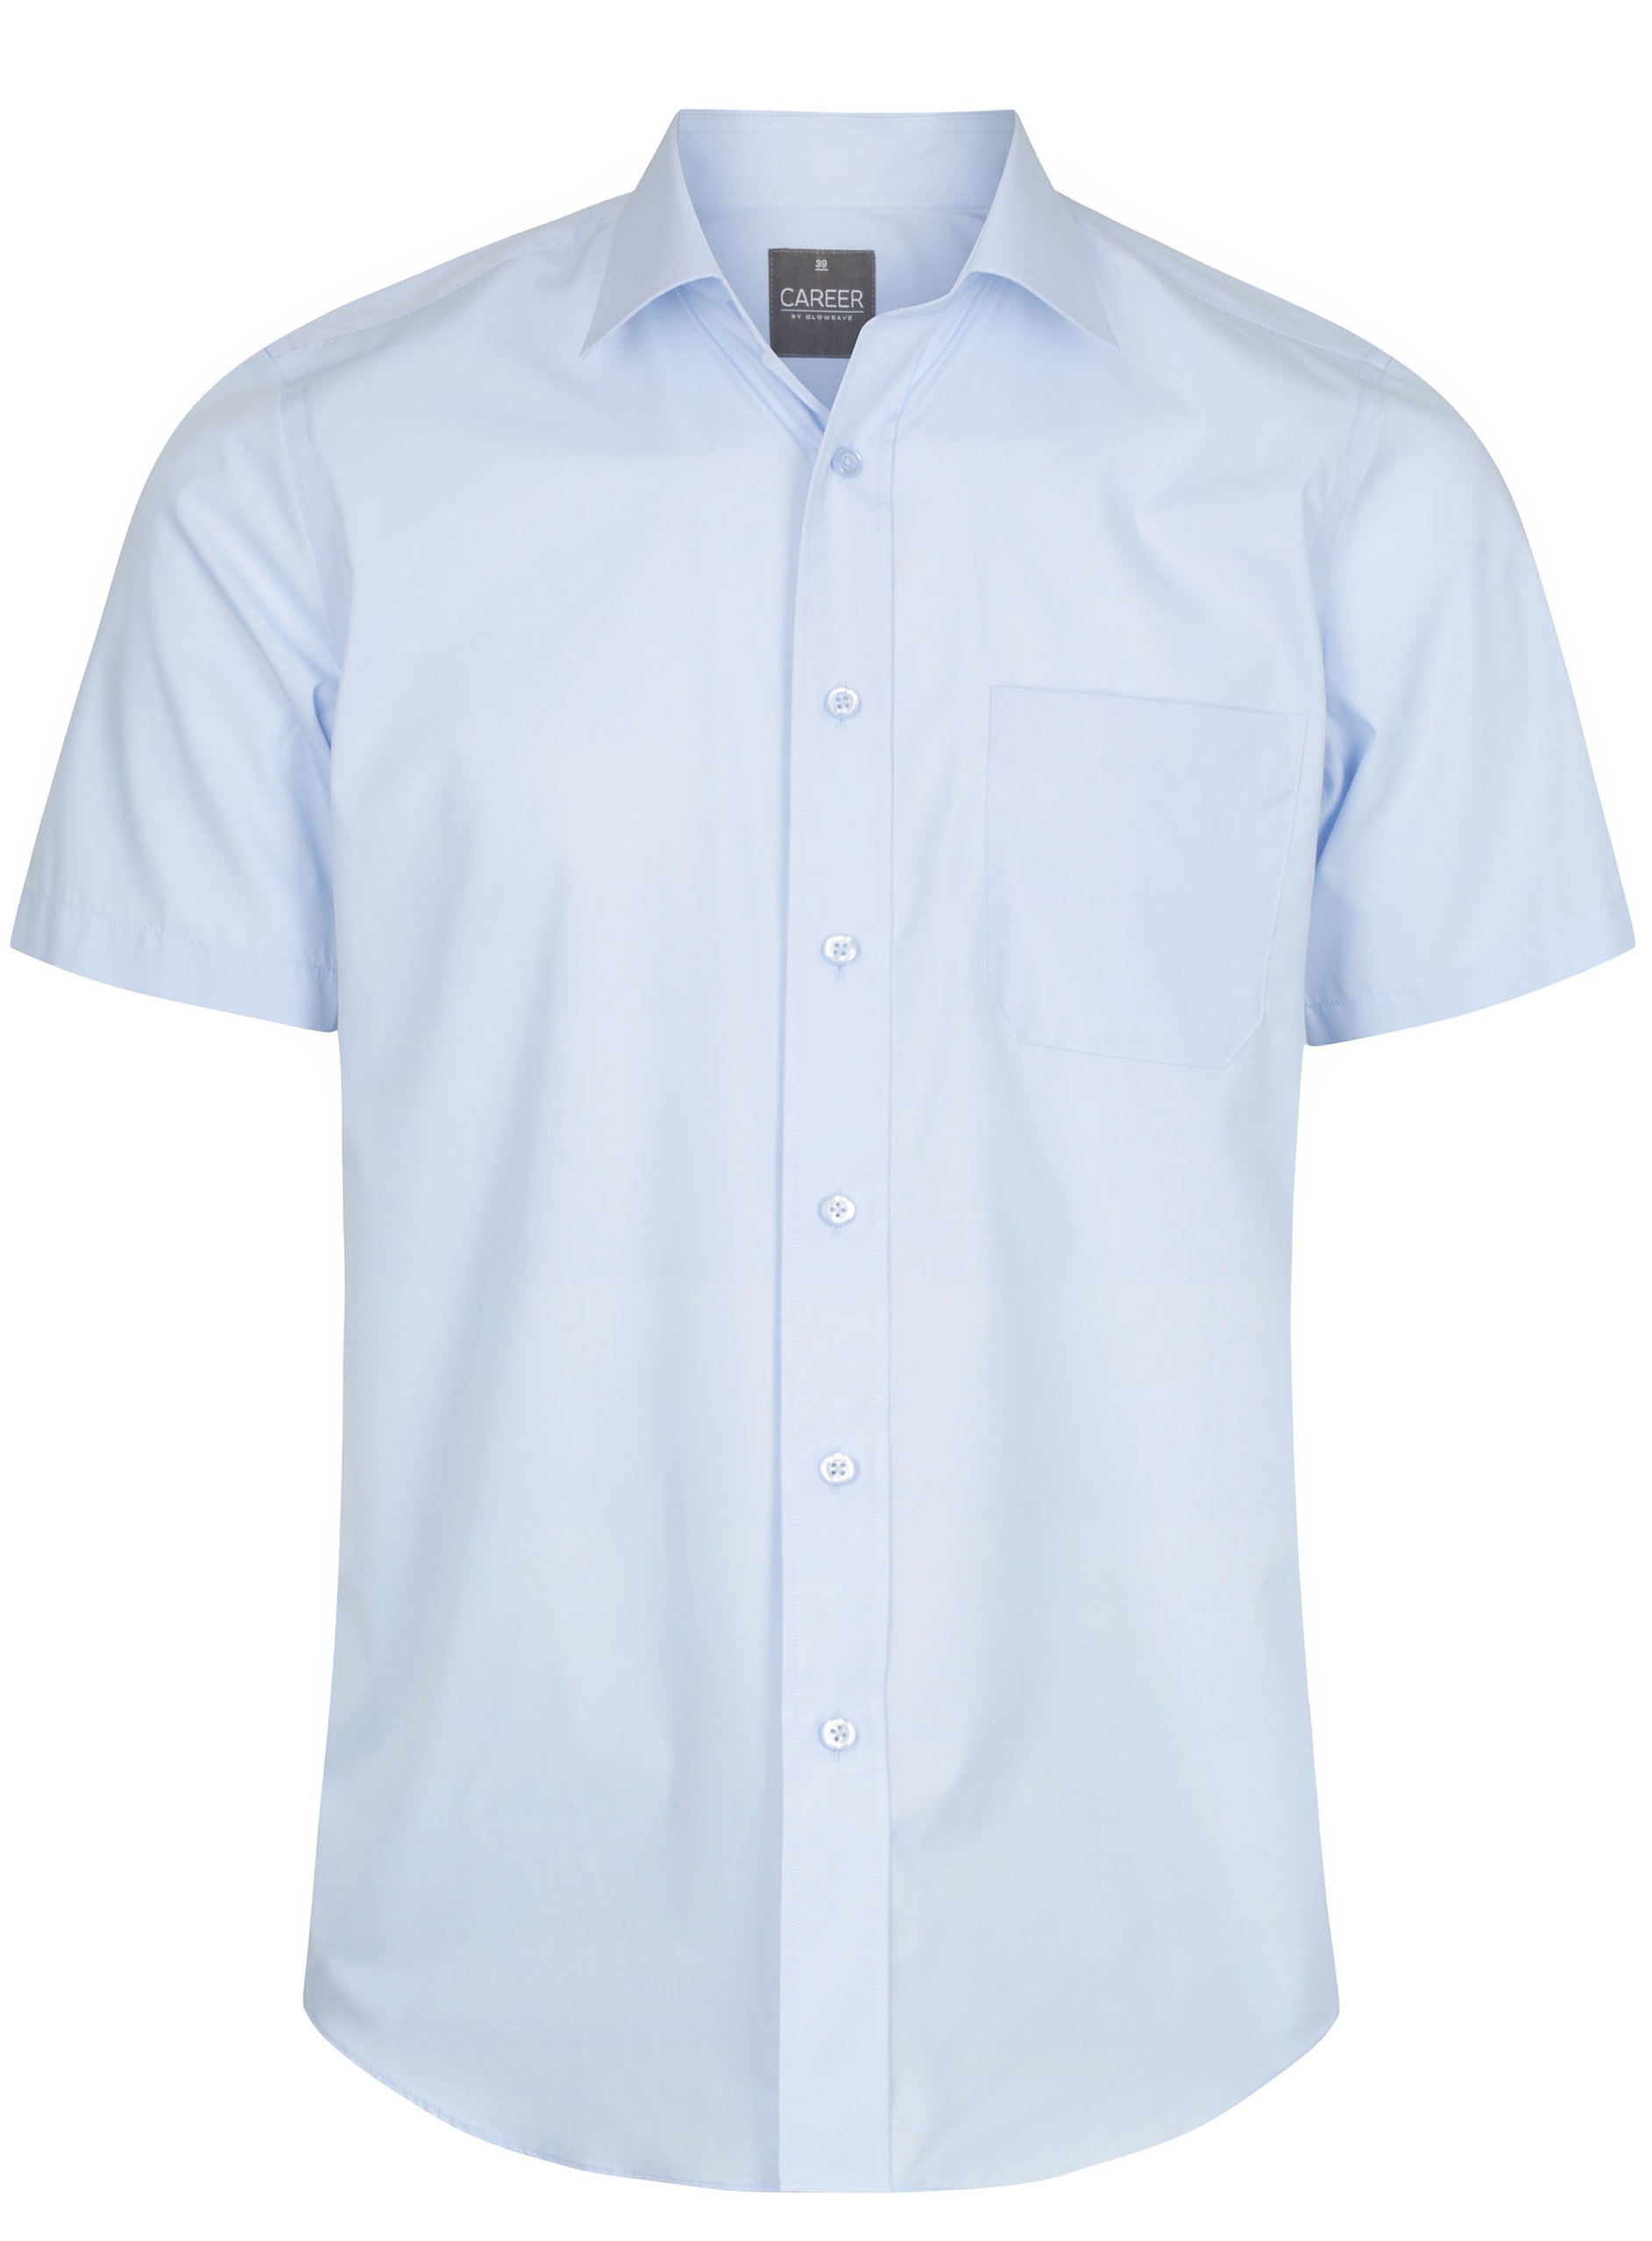 Gloweave big mens short sleeve shirts in five base colours.